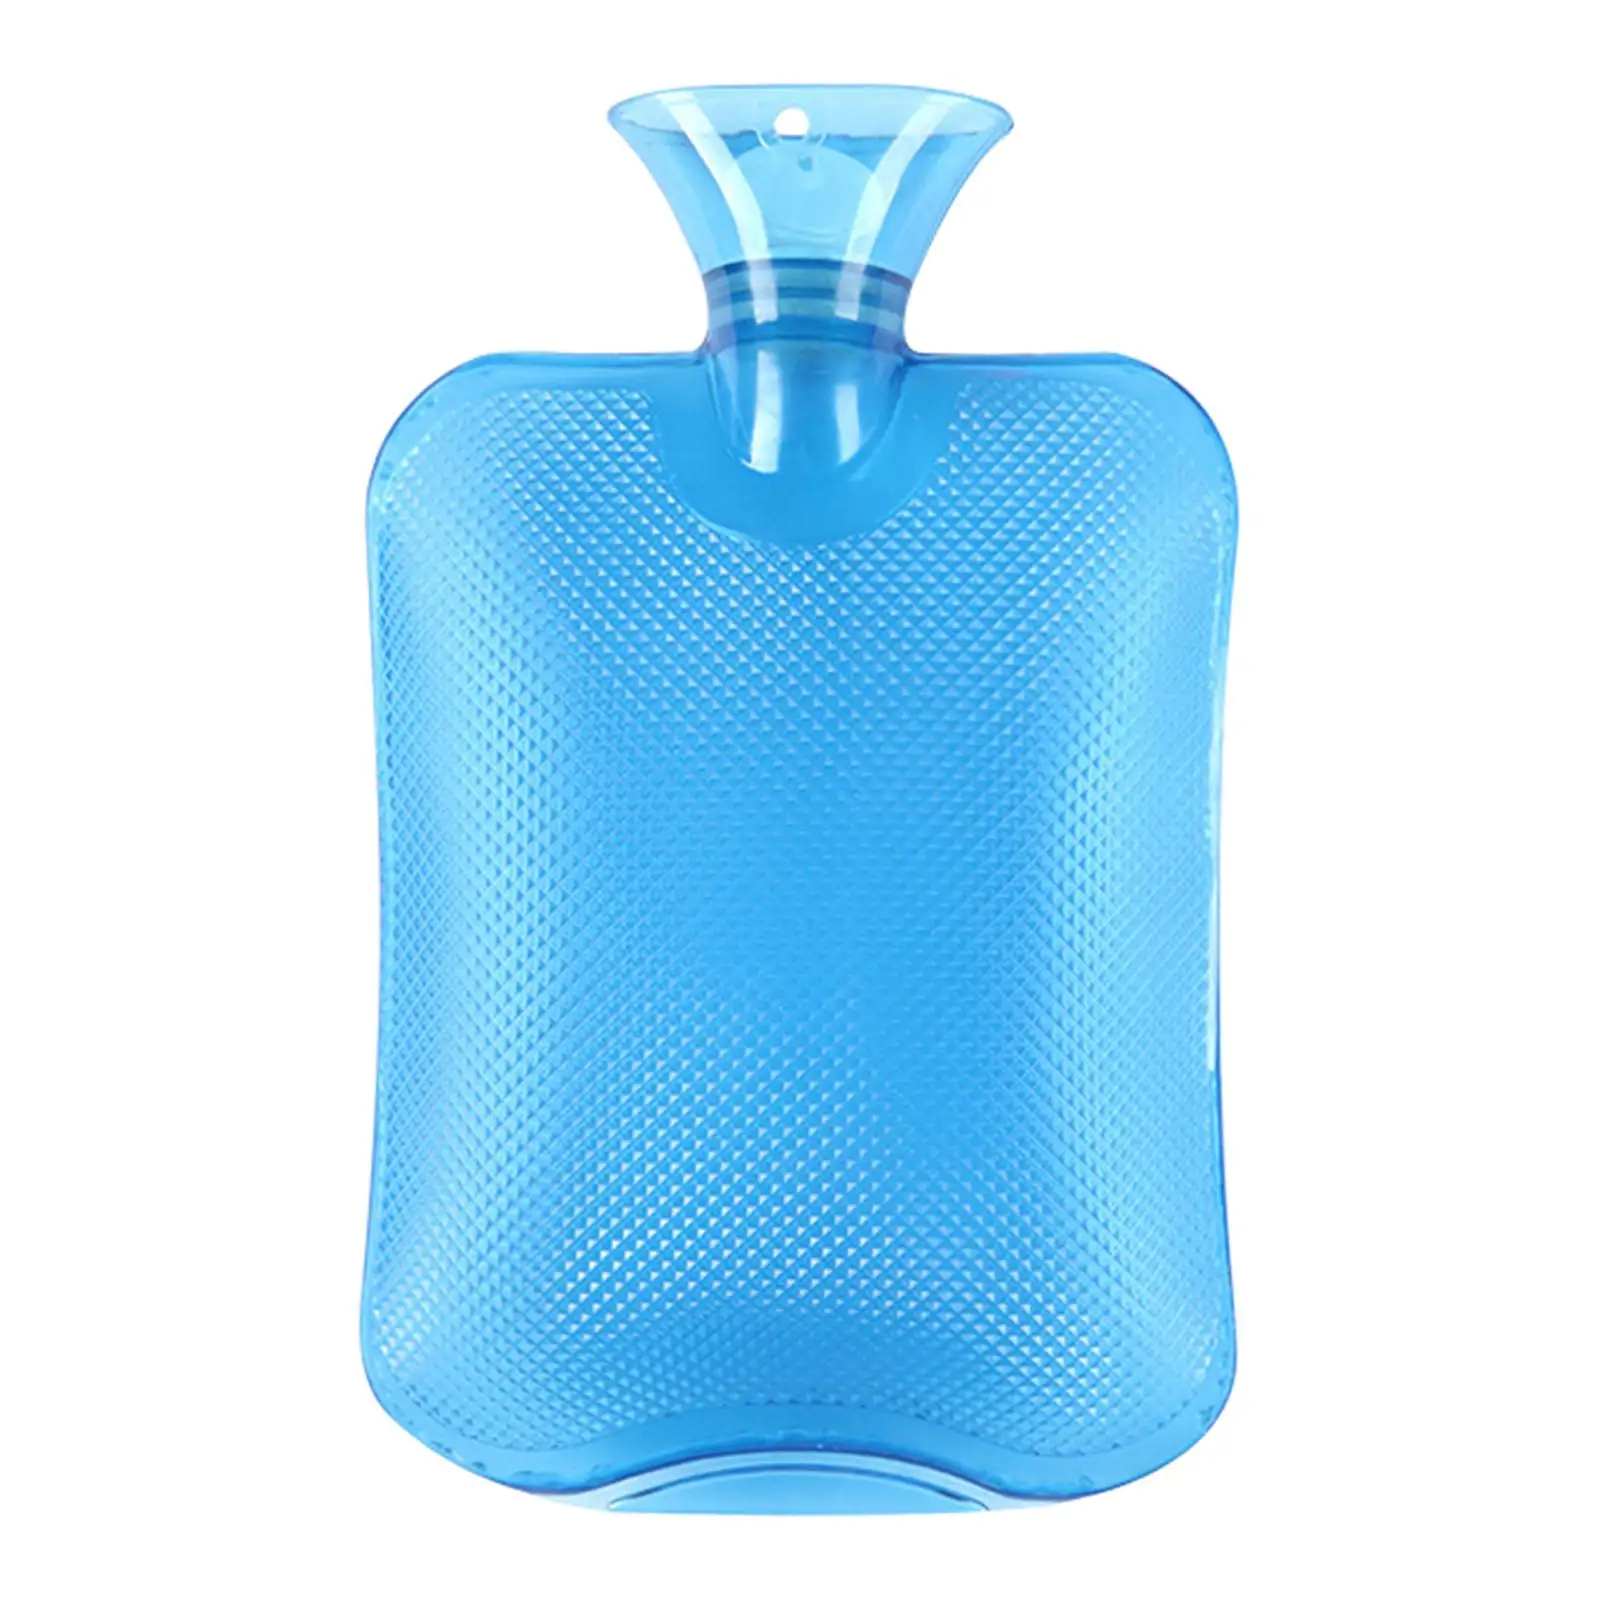 Premium Hot Water Bottle Hand Warmer 2 Liter Hot Water Bag Large